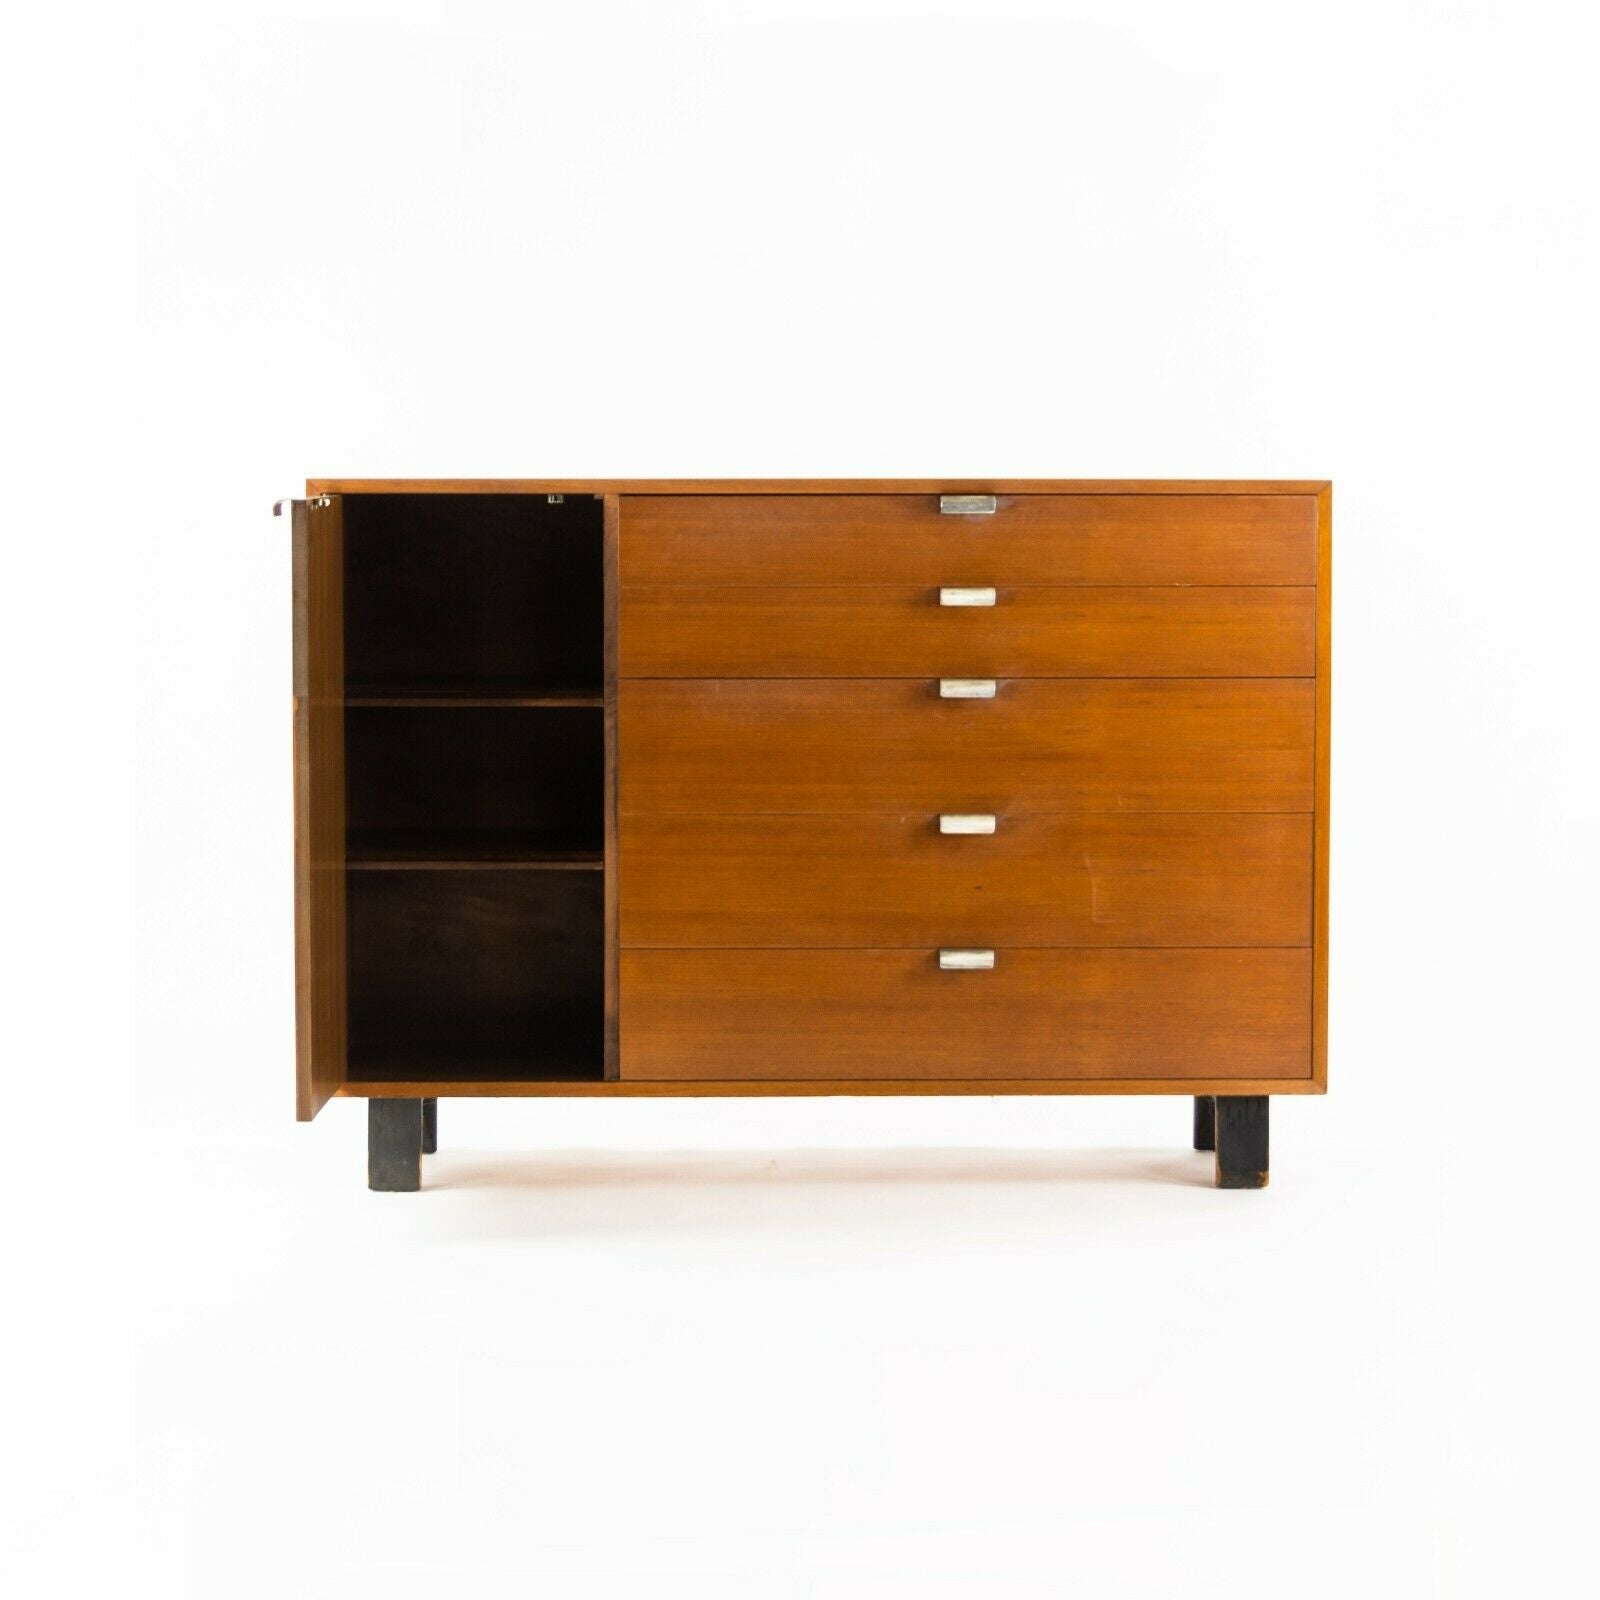 1954 George Nelson Herman Miller Basic Cabinet Series 4936 Credenza / Dresser